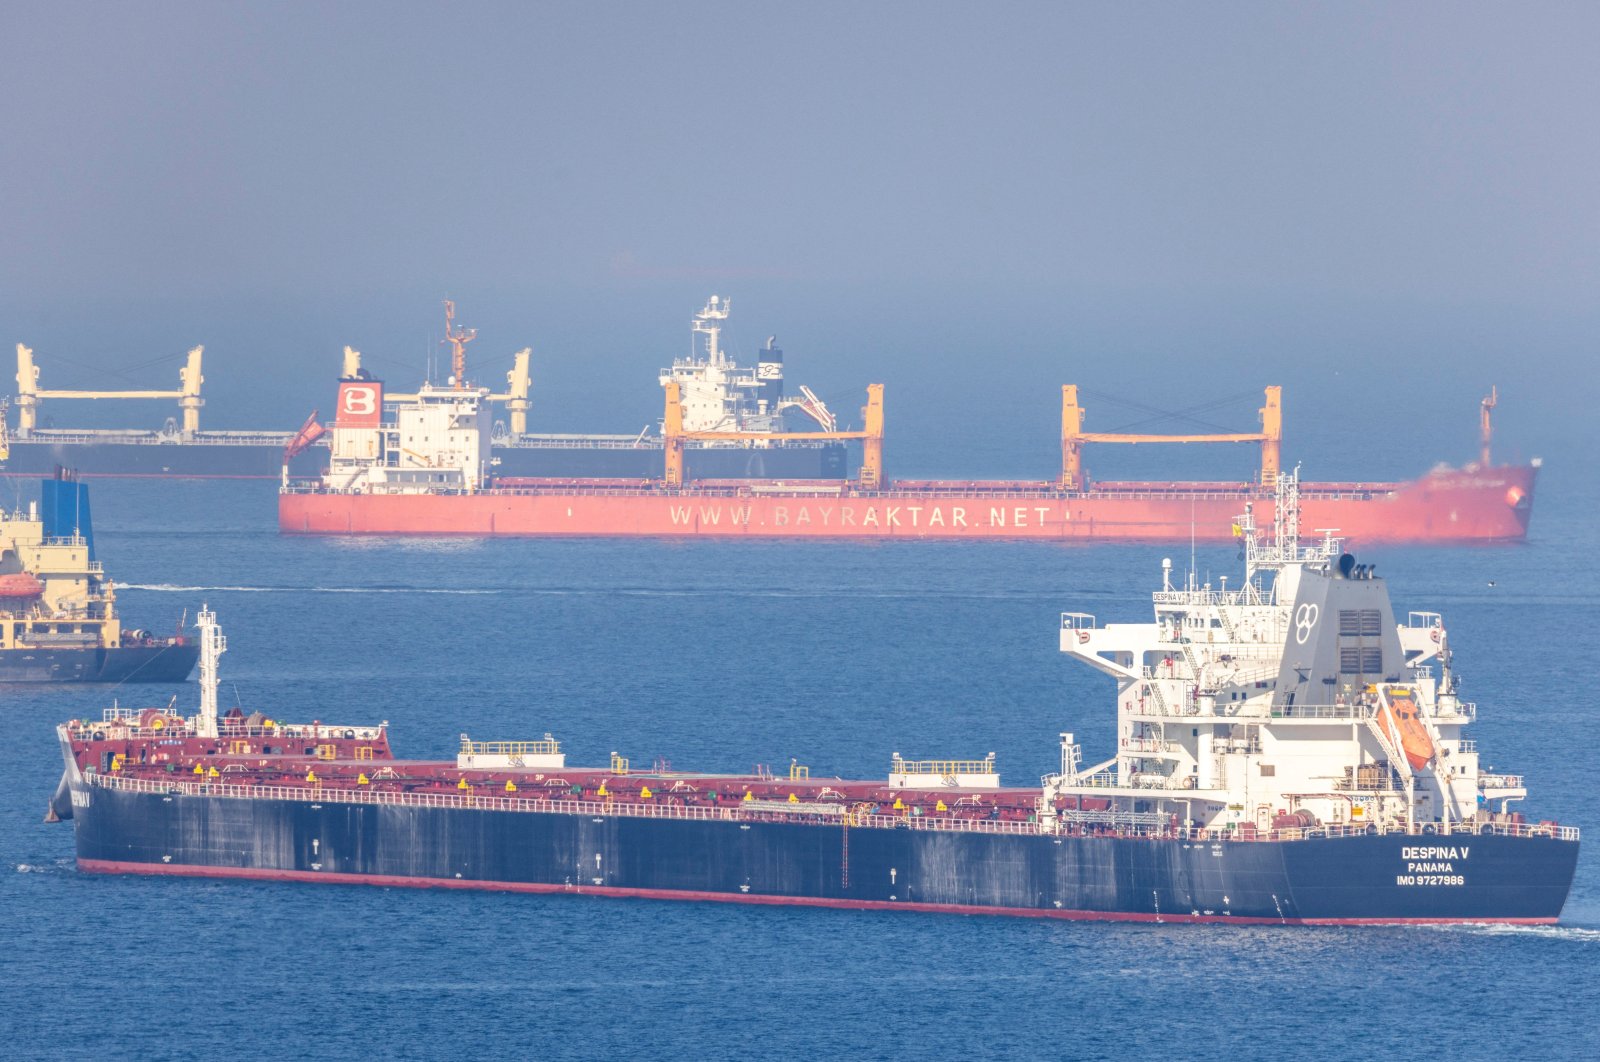 The cargo ship Despina V, carrying Ukrainian grain, is seen in the Black Sea off Kilyos near Istanbul, Türkiye, Nov. 2, 2022. (Reuters Photo)